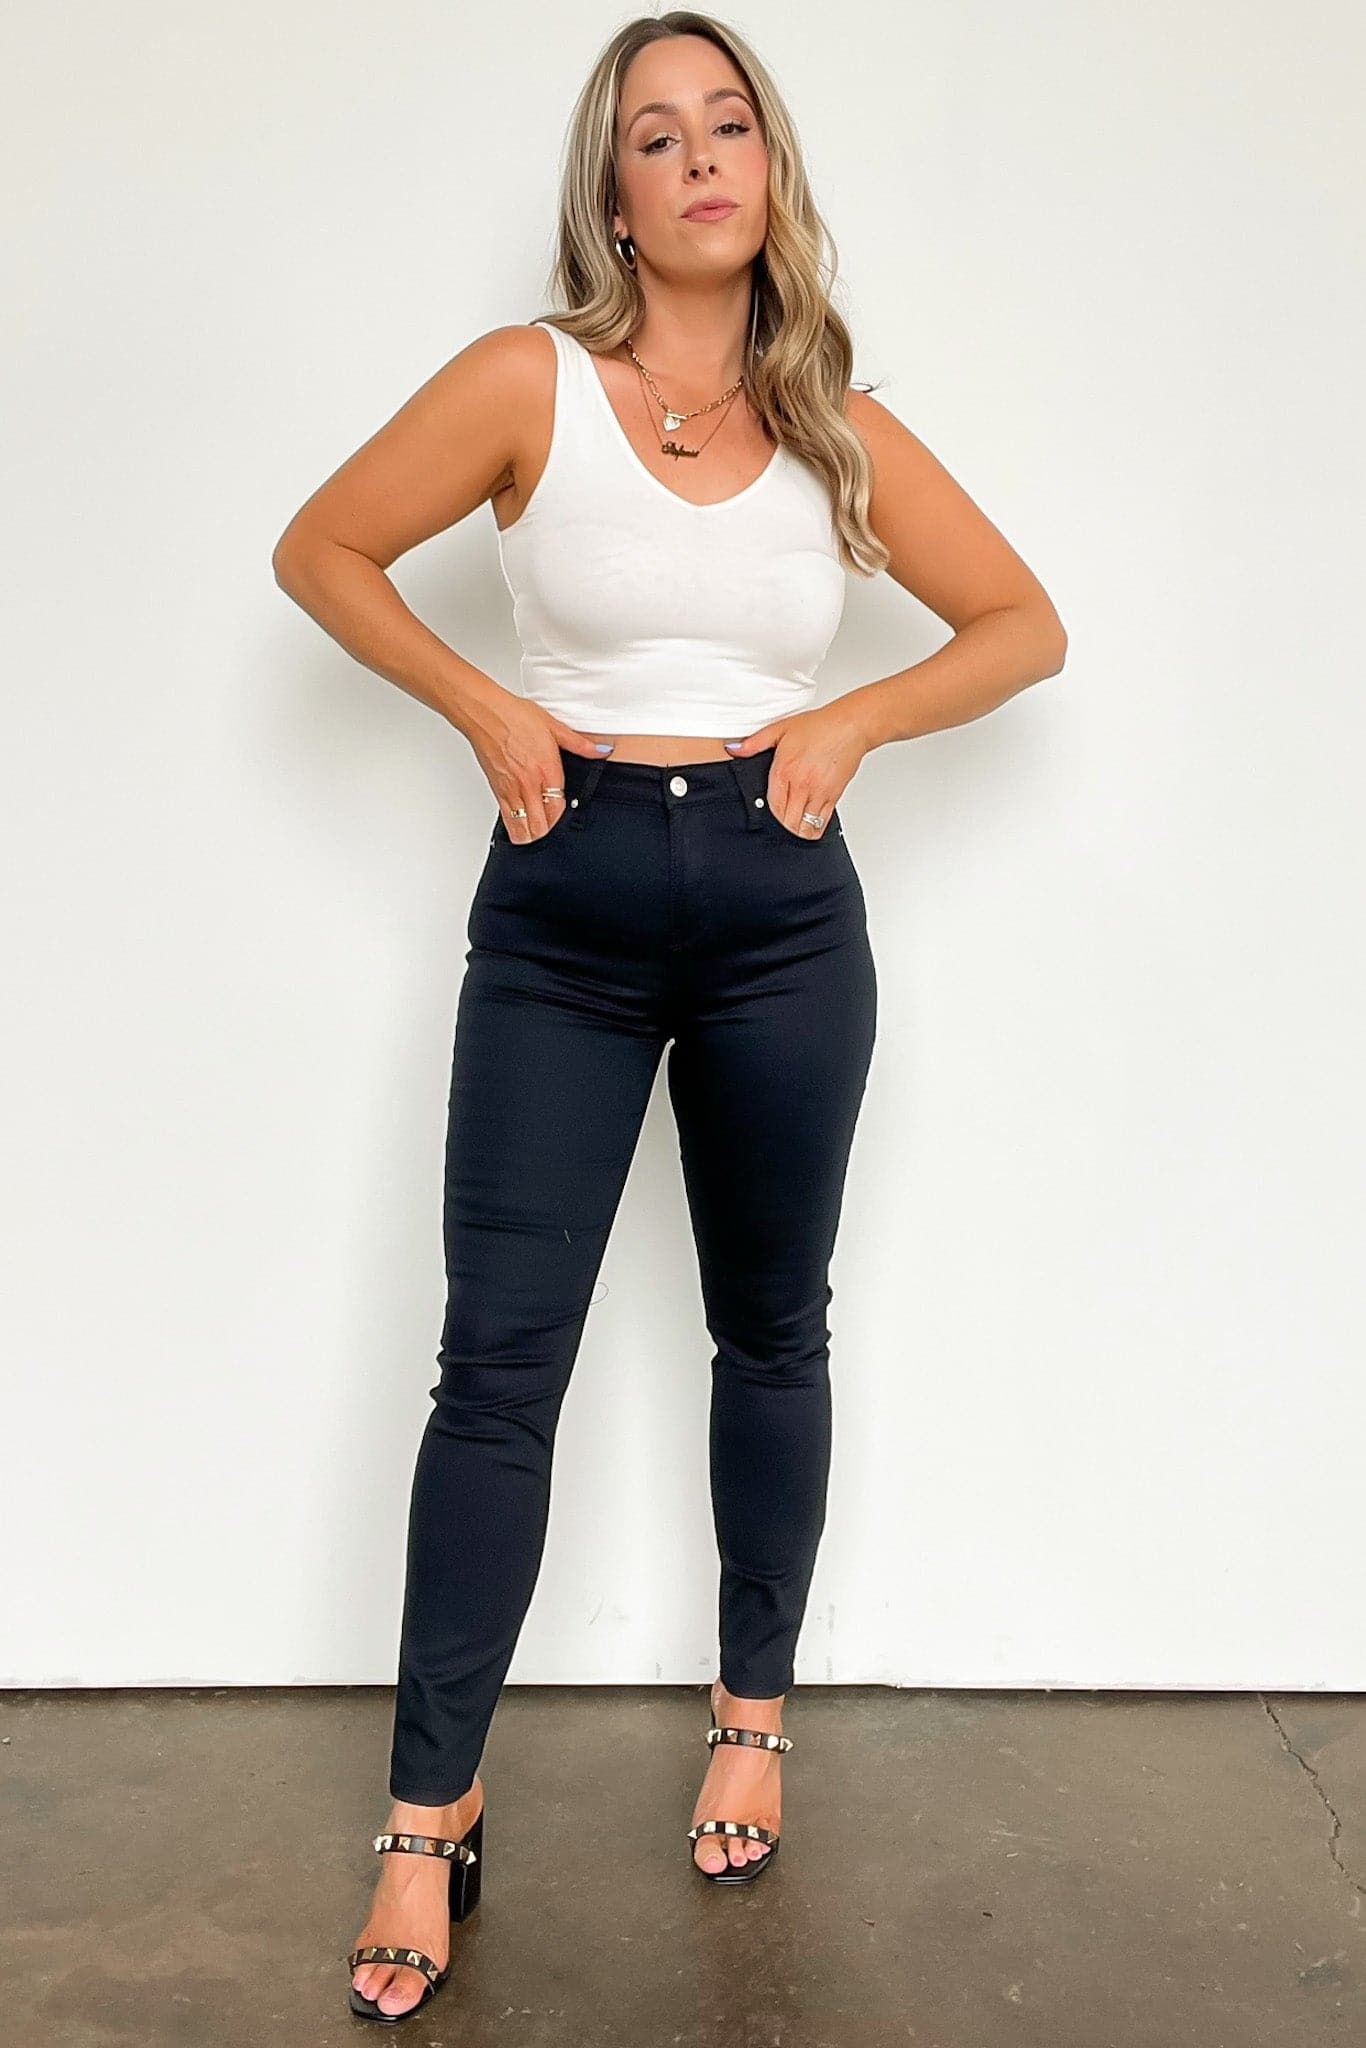  Tasha High Rise Skinny Jeans - kitchencabinetmagic